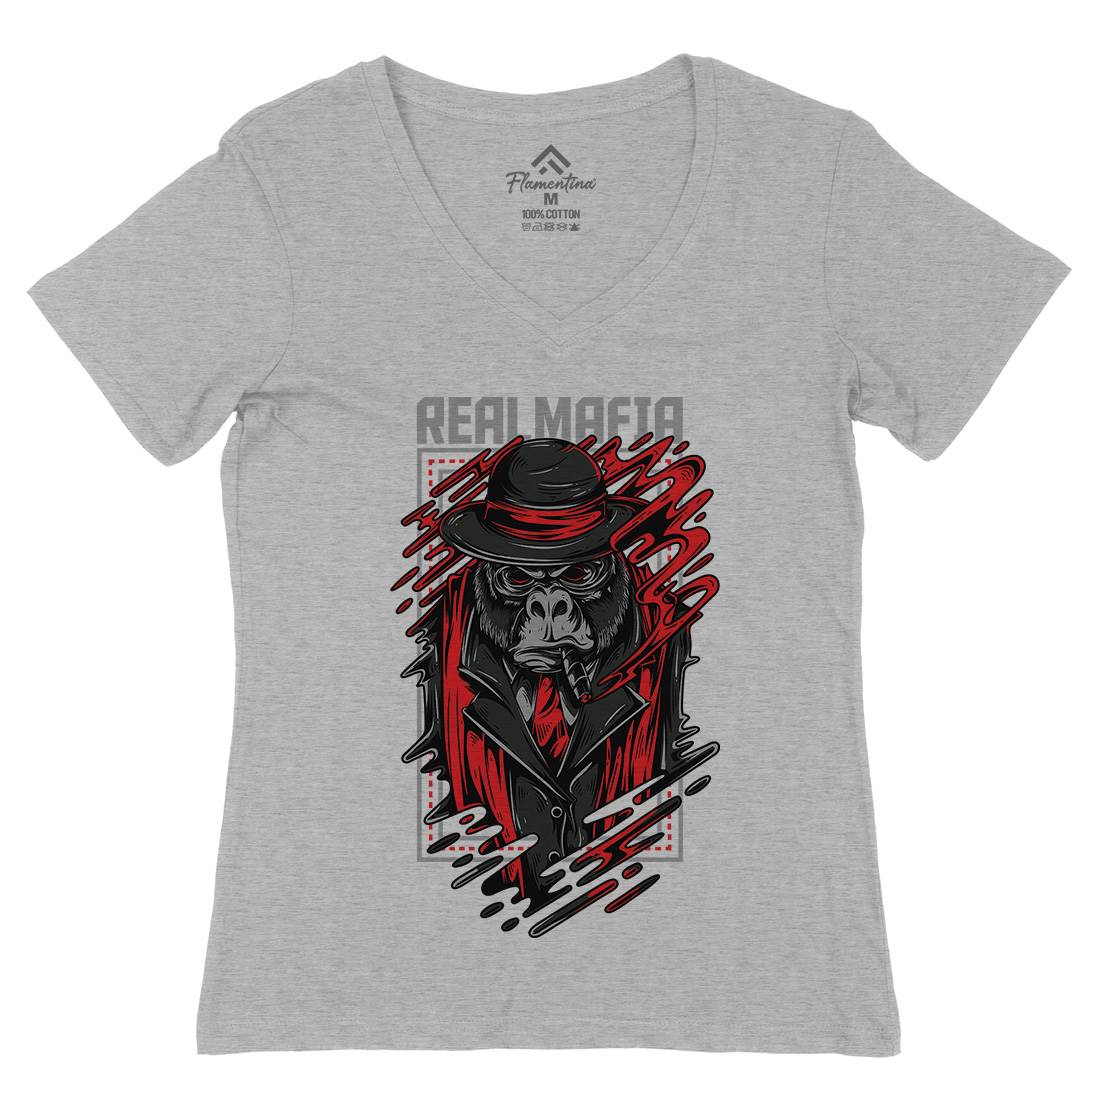 Real Mafia Womens Organic V-Neck T-Shirt animals D690